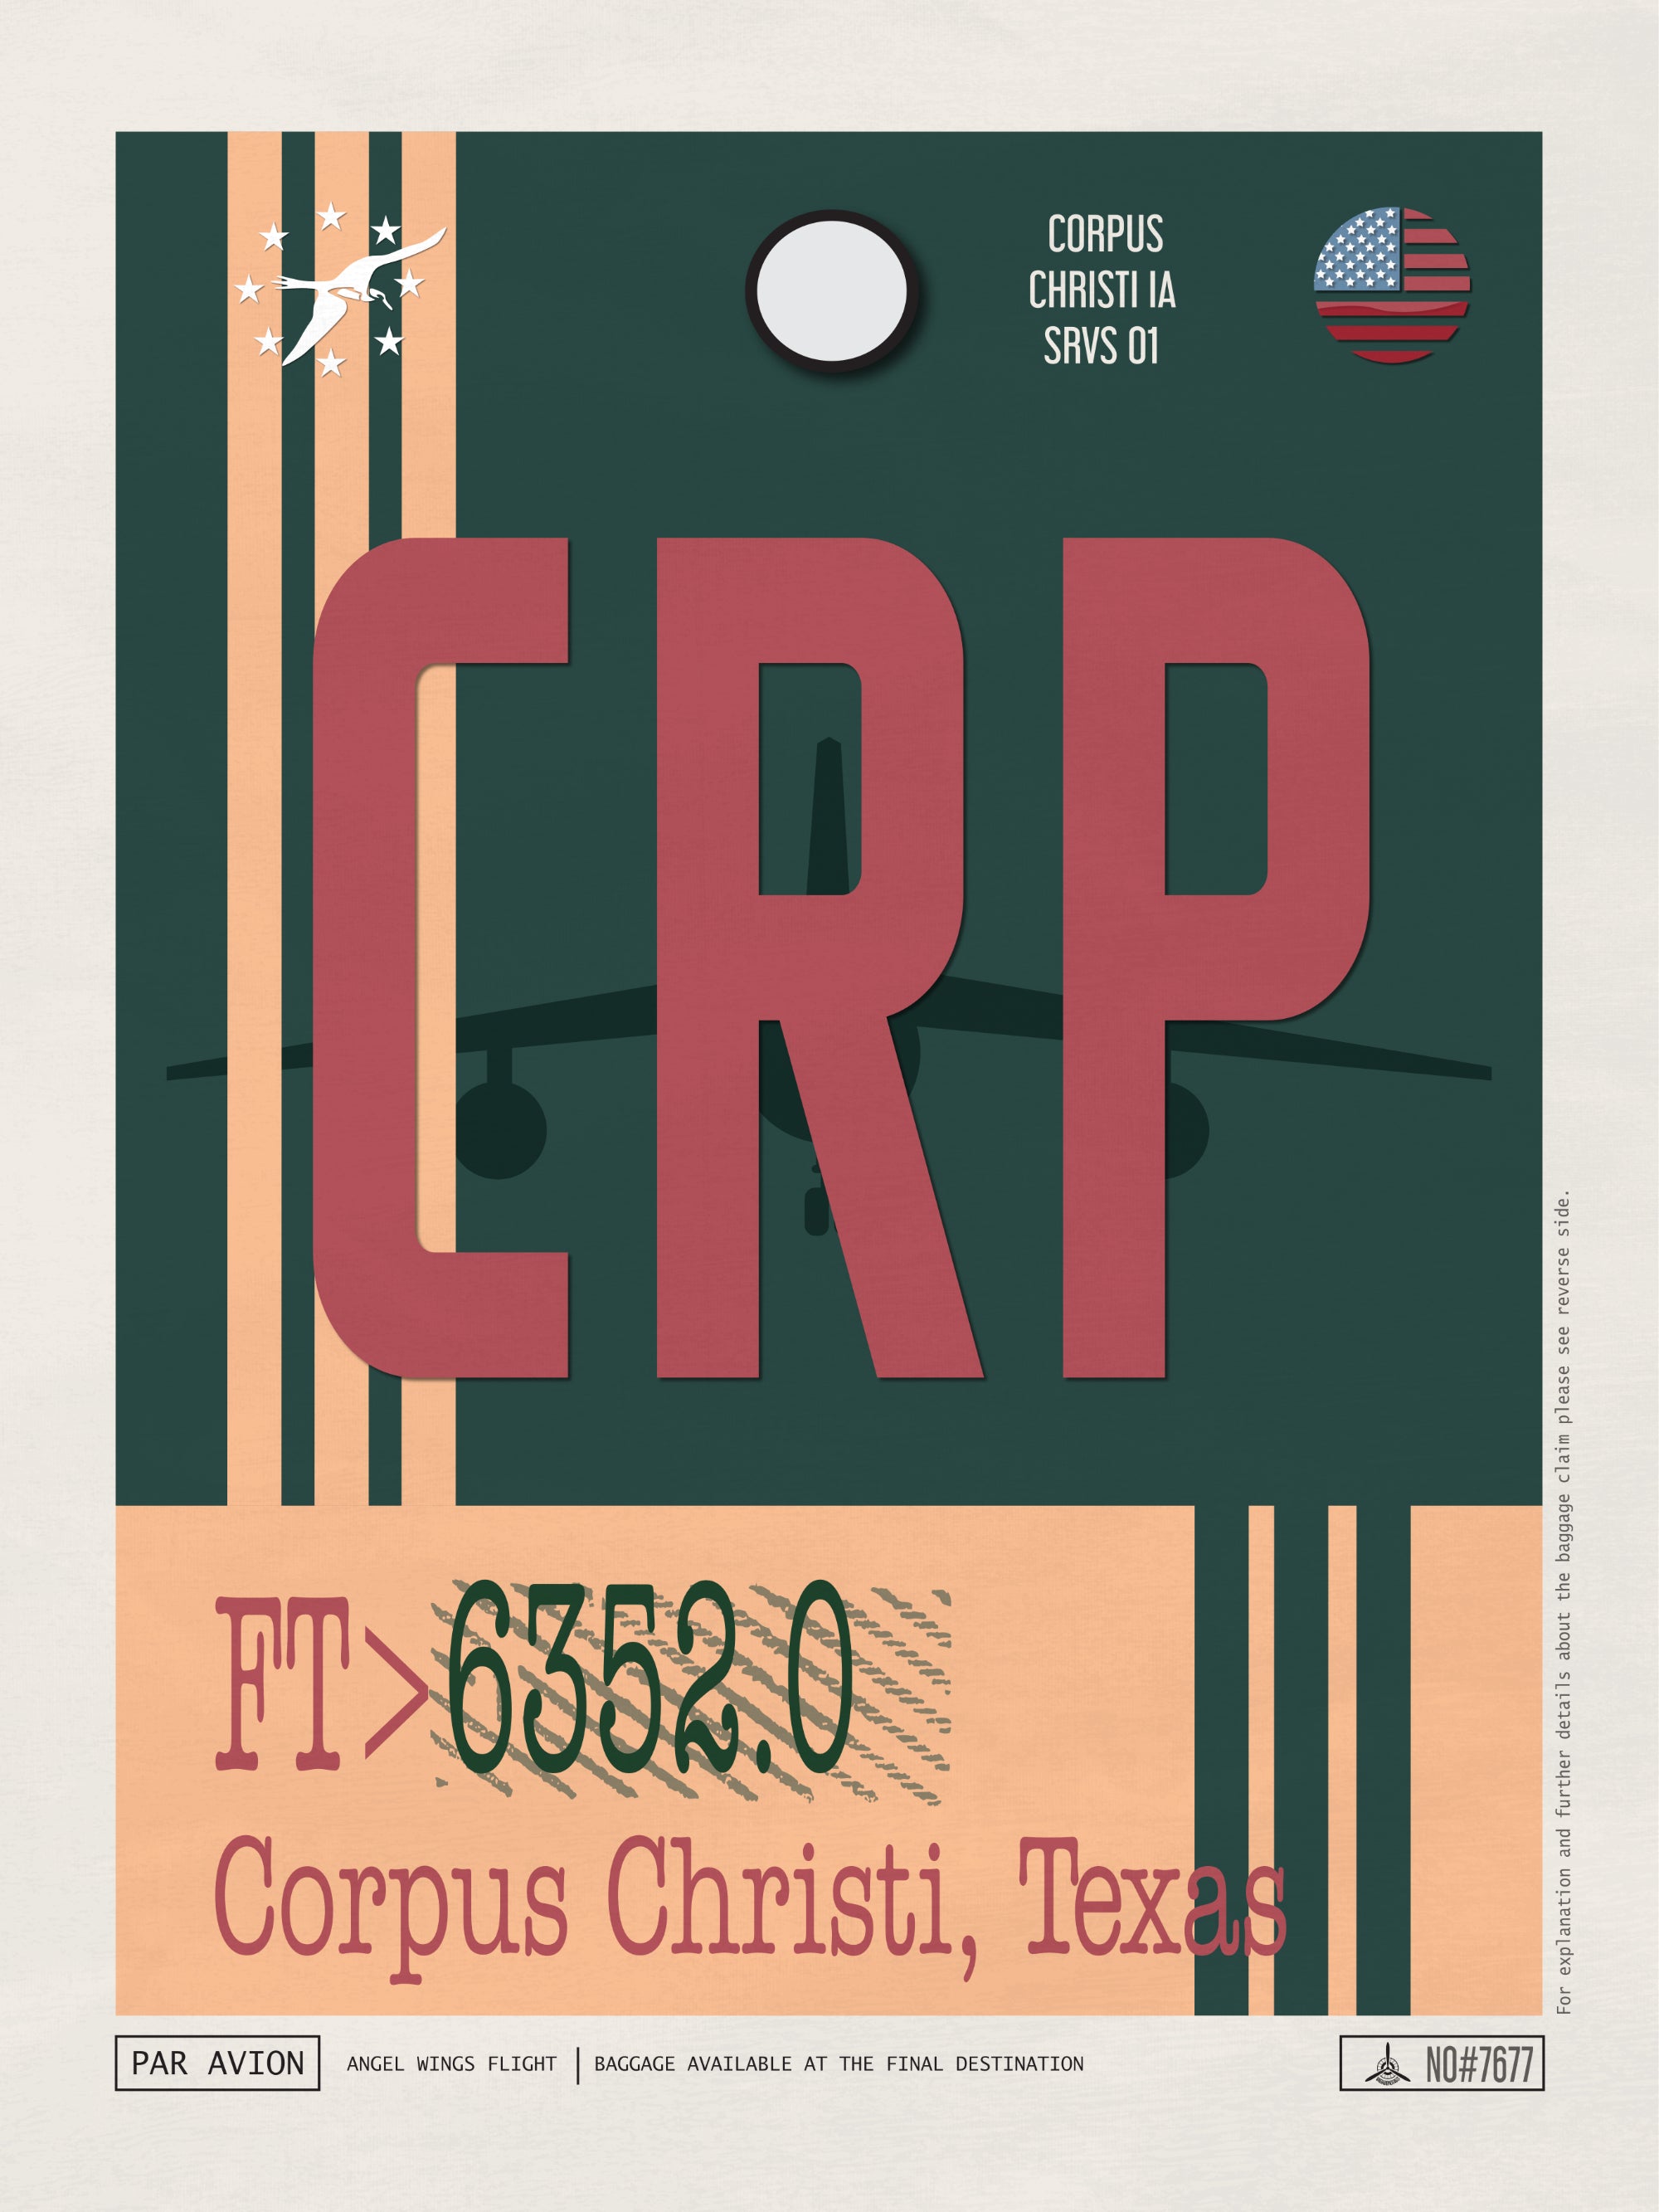 Corpus Christi, Texas USA - CRP Airport Code Poster